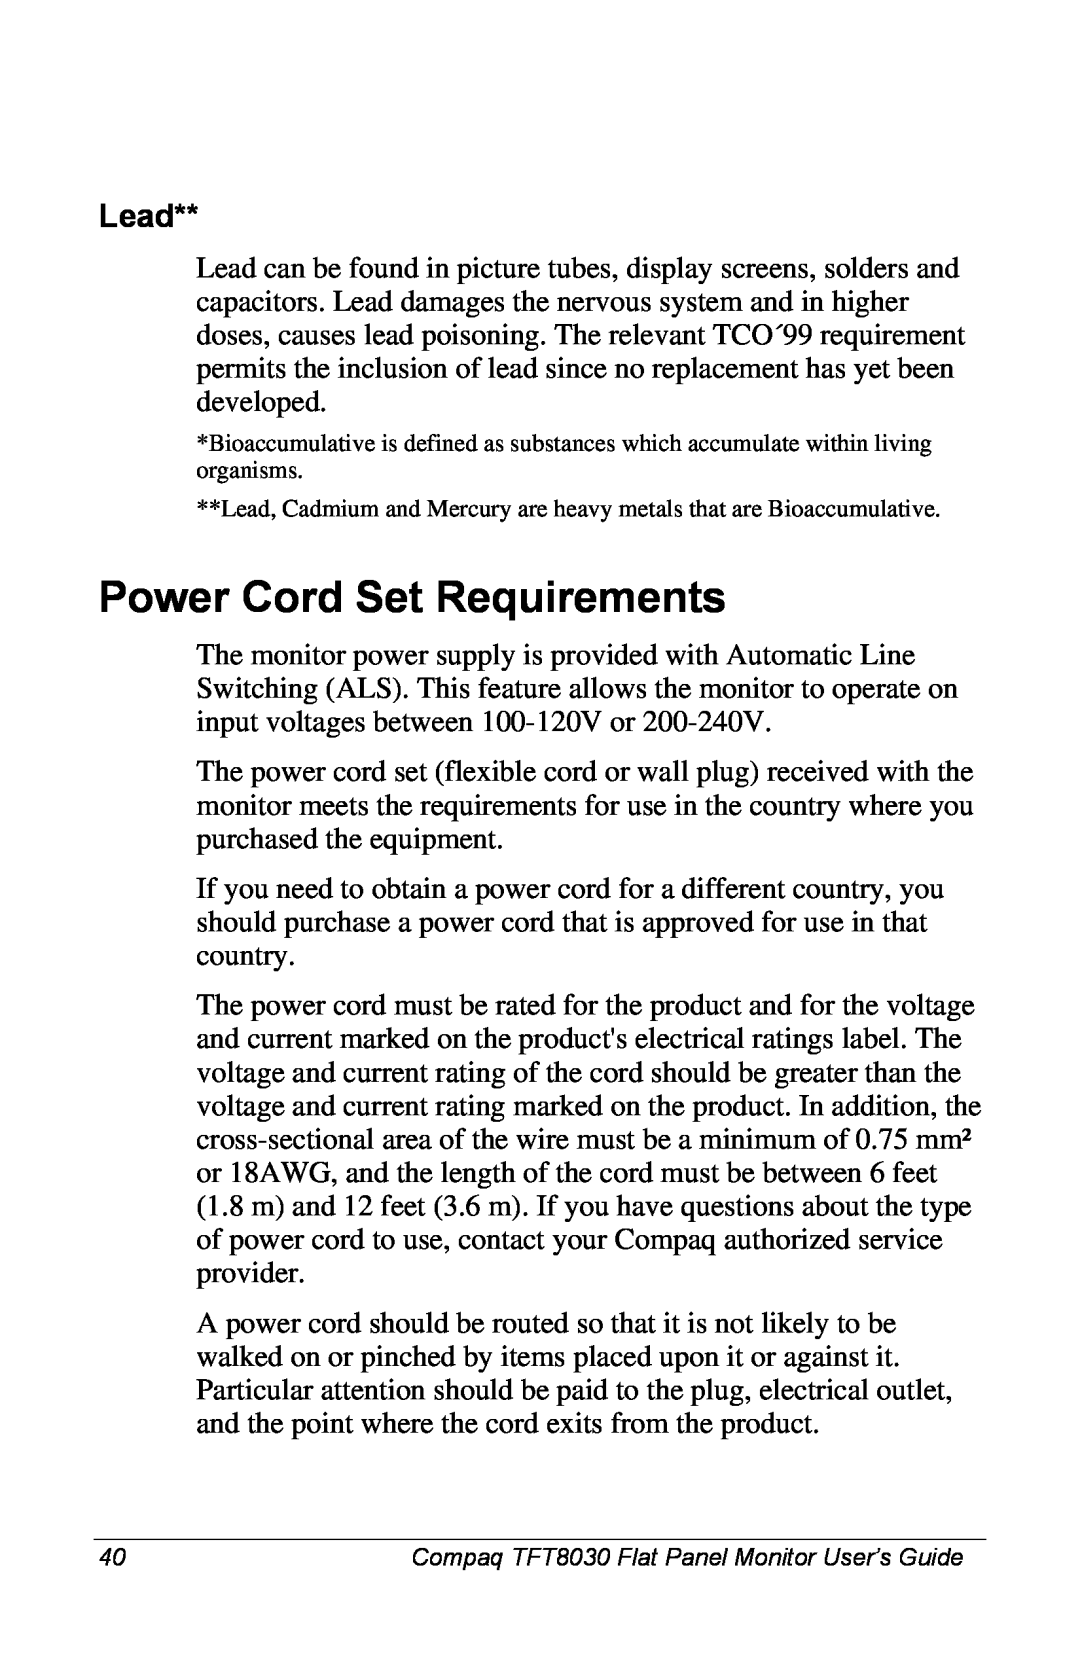 Compaq 8030 manual Power Cord Set Requirements, Lead 